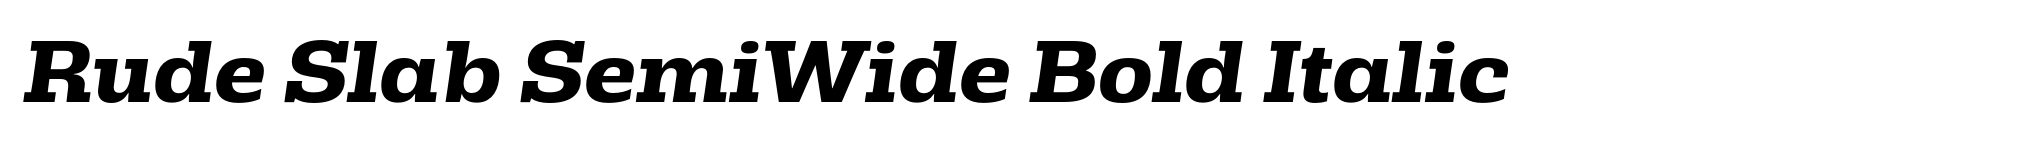 Rude Slab SemiWide Bold Italic image